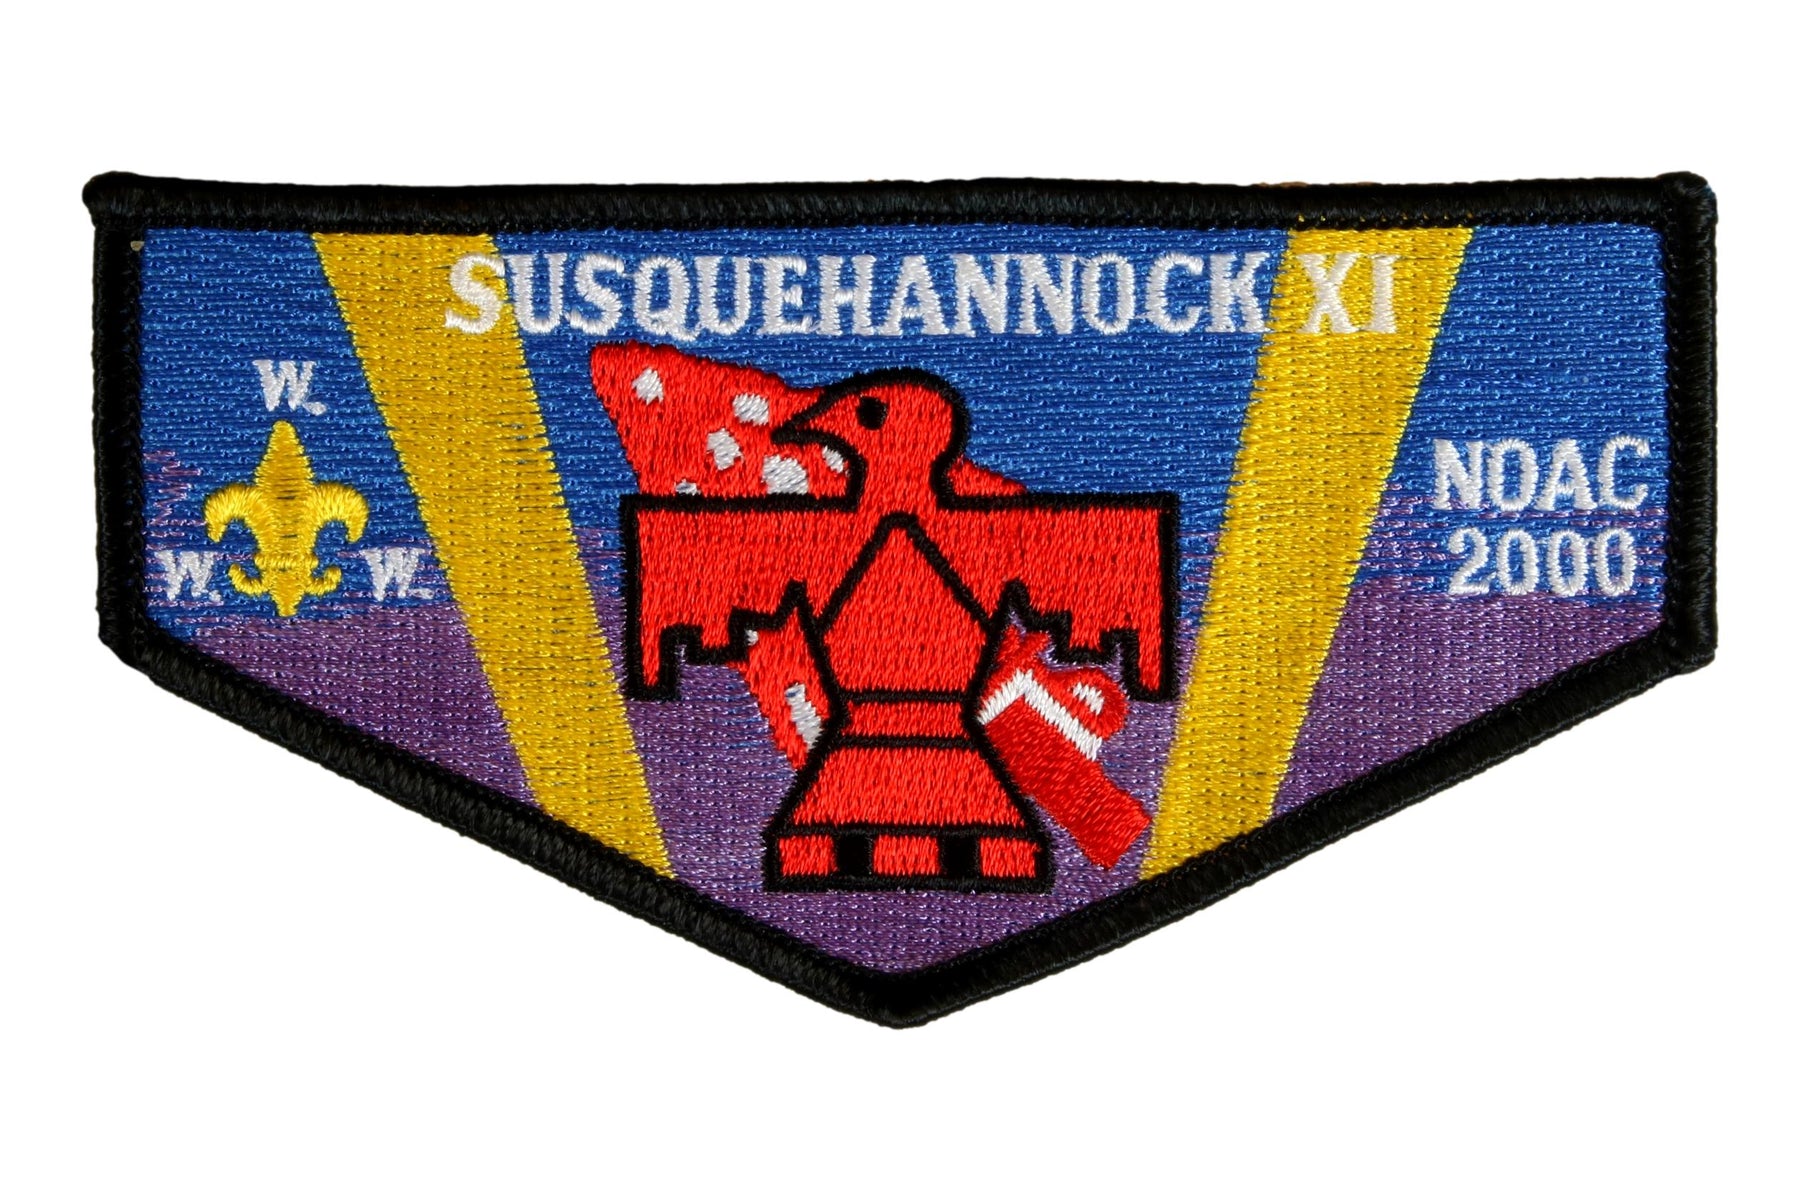 Lodge 11 Susquehannock Flap S-23 NOAC 2000